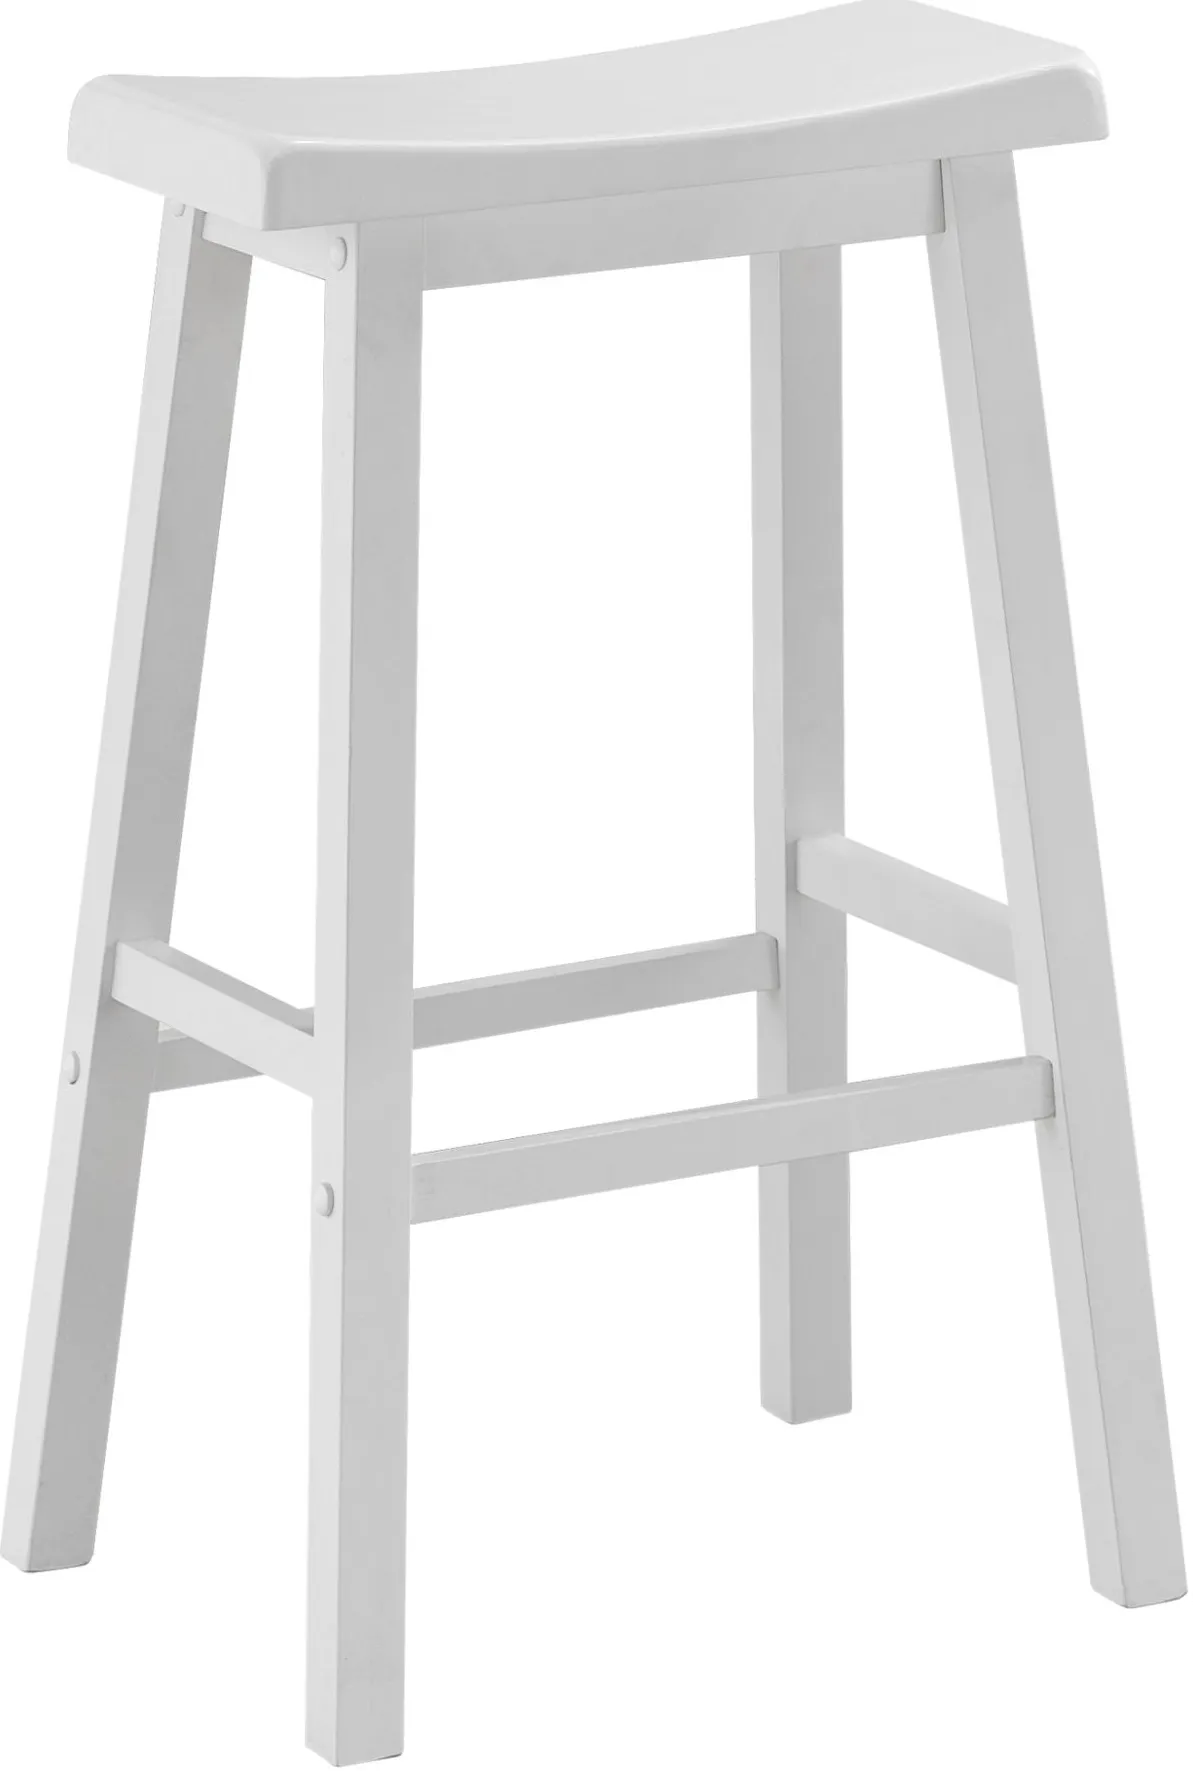 Bar Stool, Set Of 2, Bar Height, Saddle Seat, Wood, White, Contemporary, Modern